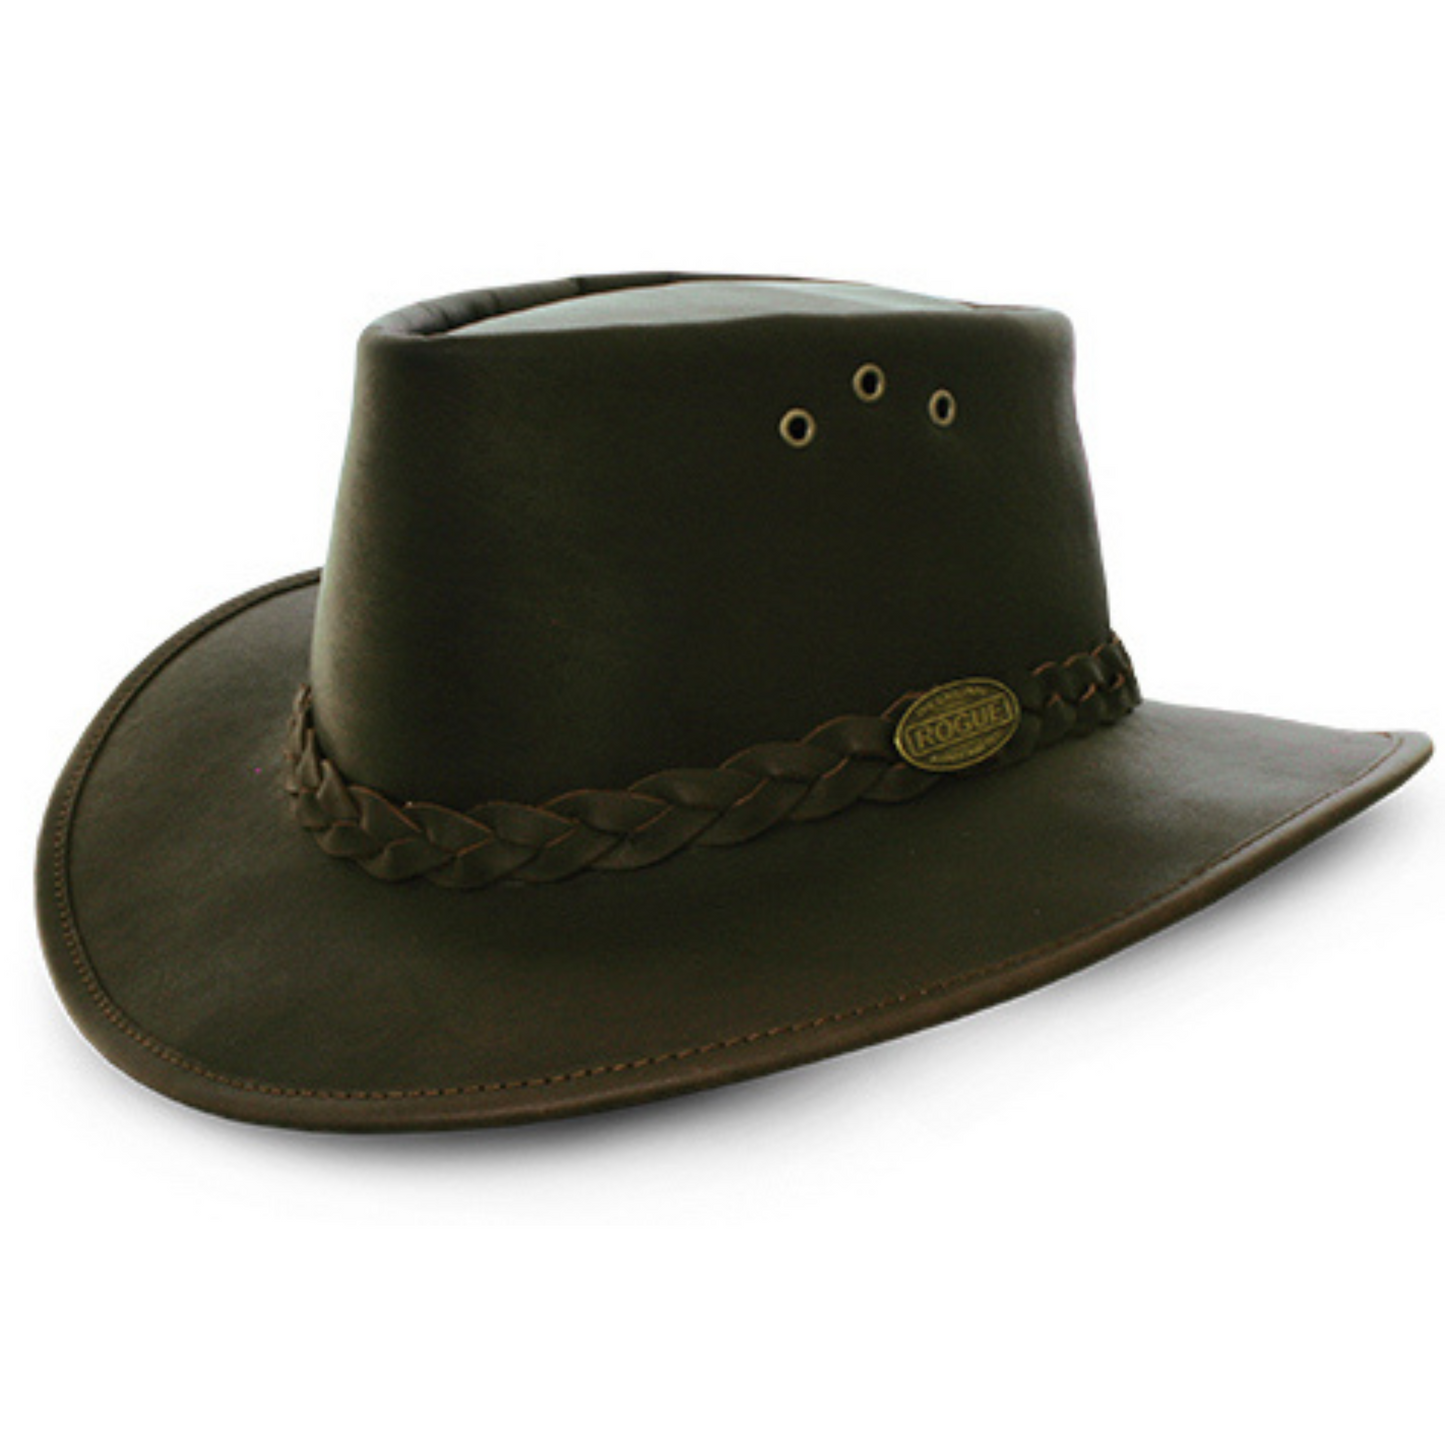 Original Rogue Mens Breezy Leather Brim Hat From Otterburn Mill